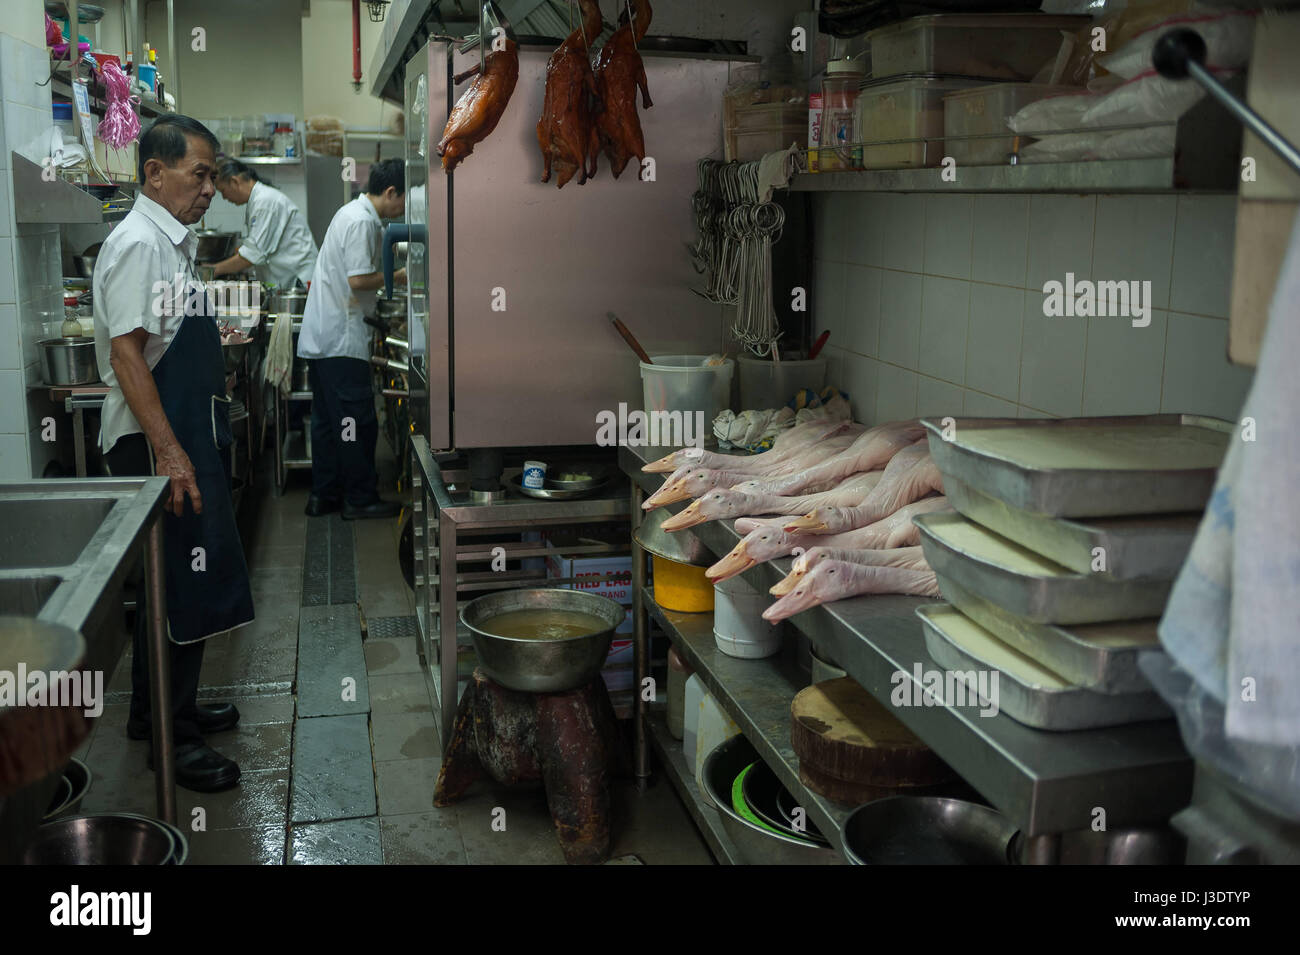 Singapore, Republic of Singapore, 2016, Restaurant kitchen in Chinatown Stock Photo